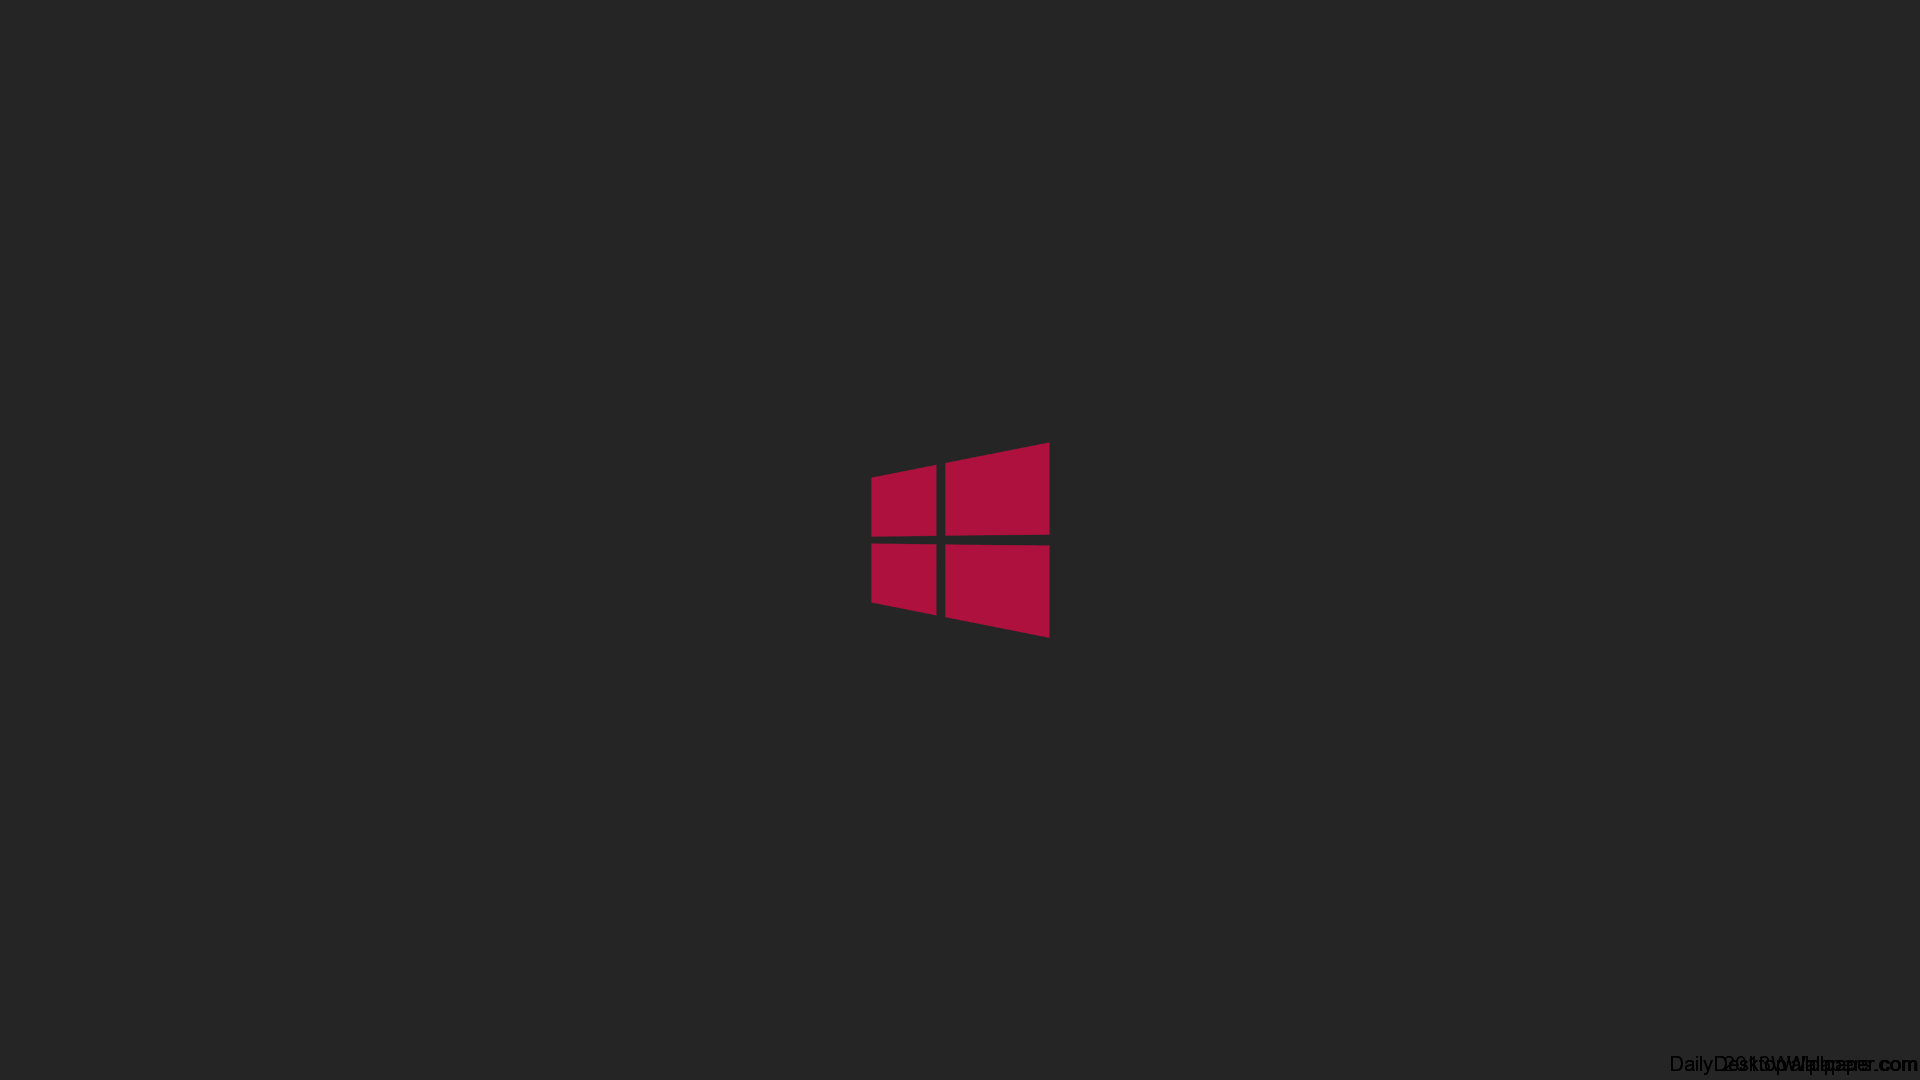 Windows 8 Logo Wallpaper Wallpaper Inn